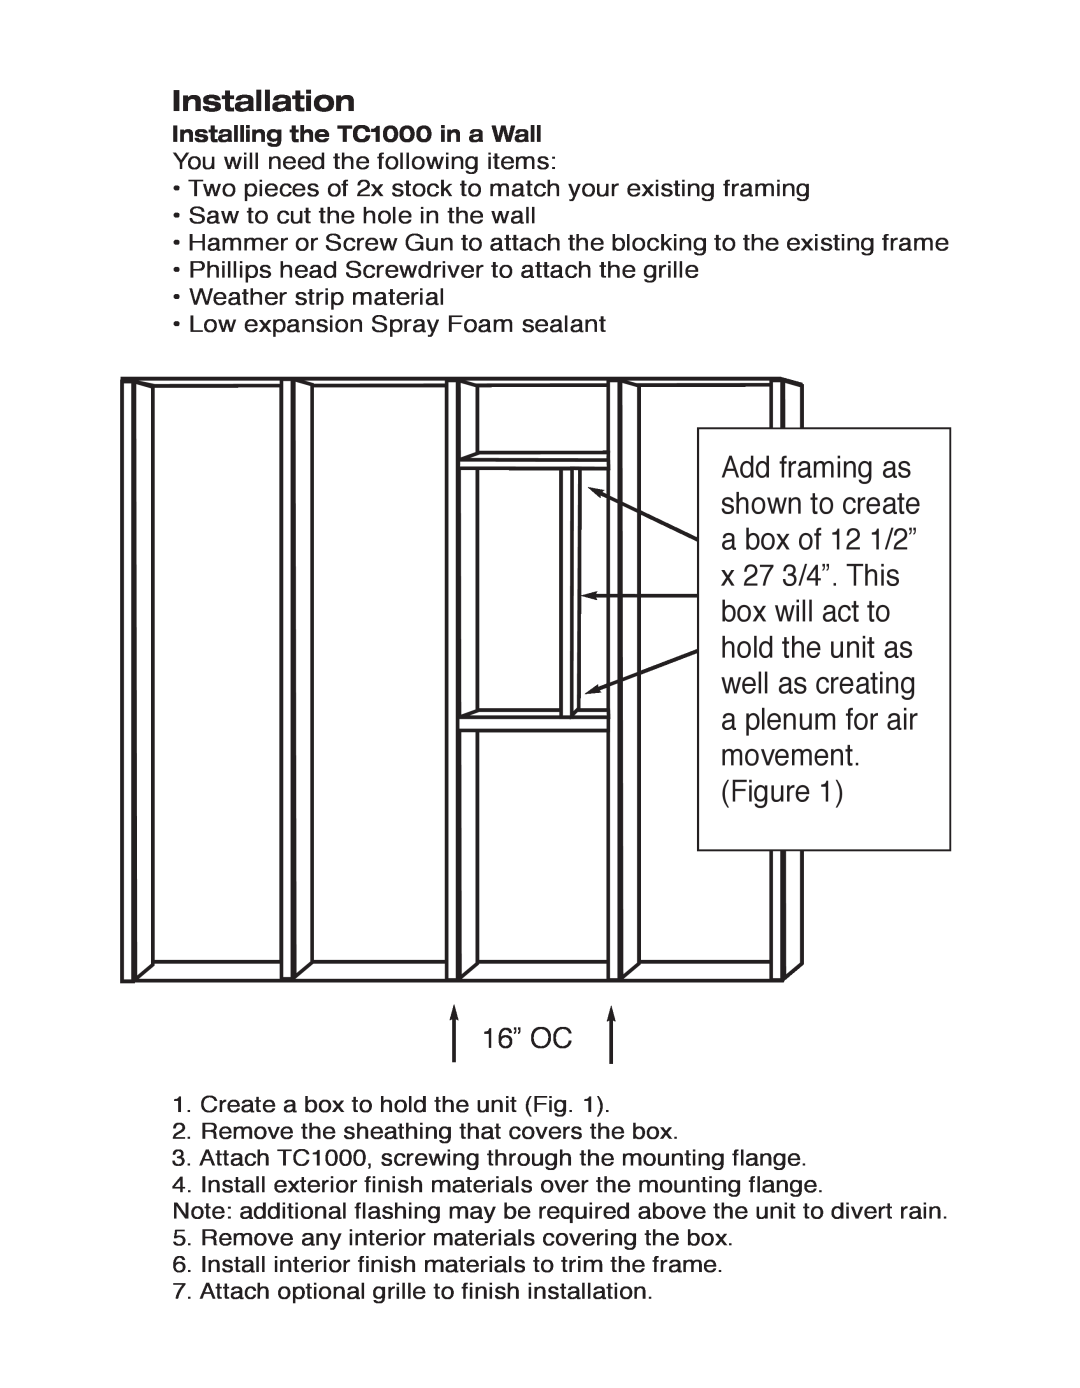 Tamarack Technologies manual Installing the TC1000 in a Wall, Installation, 16” OC 